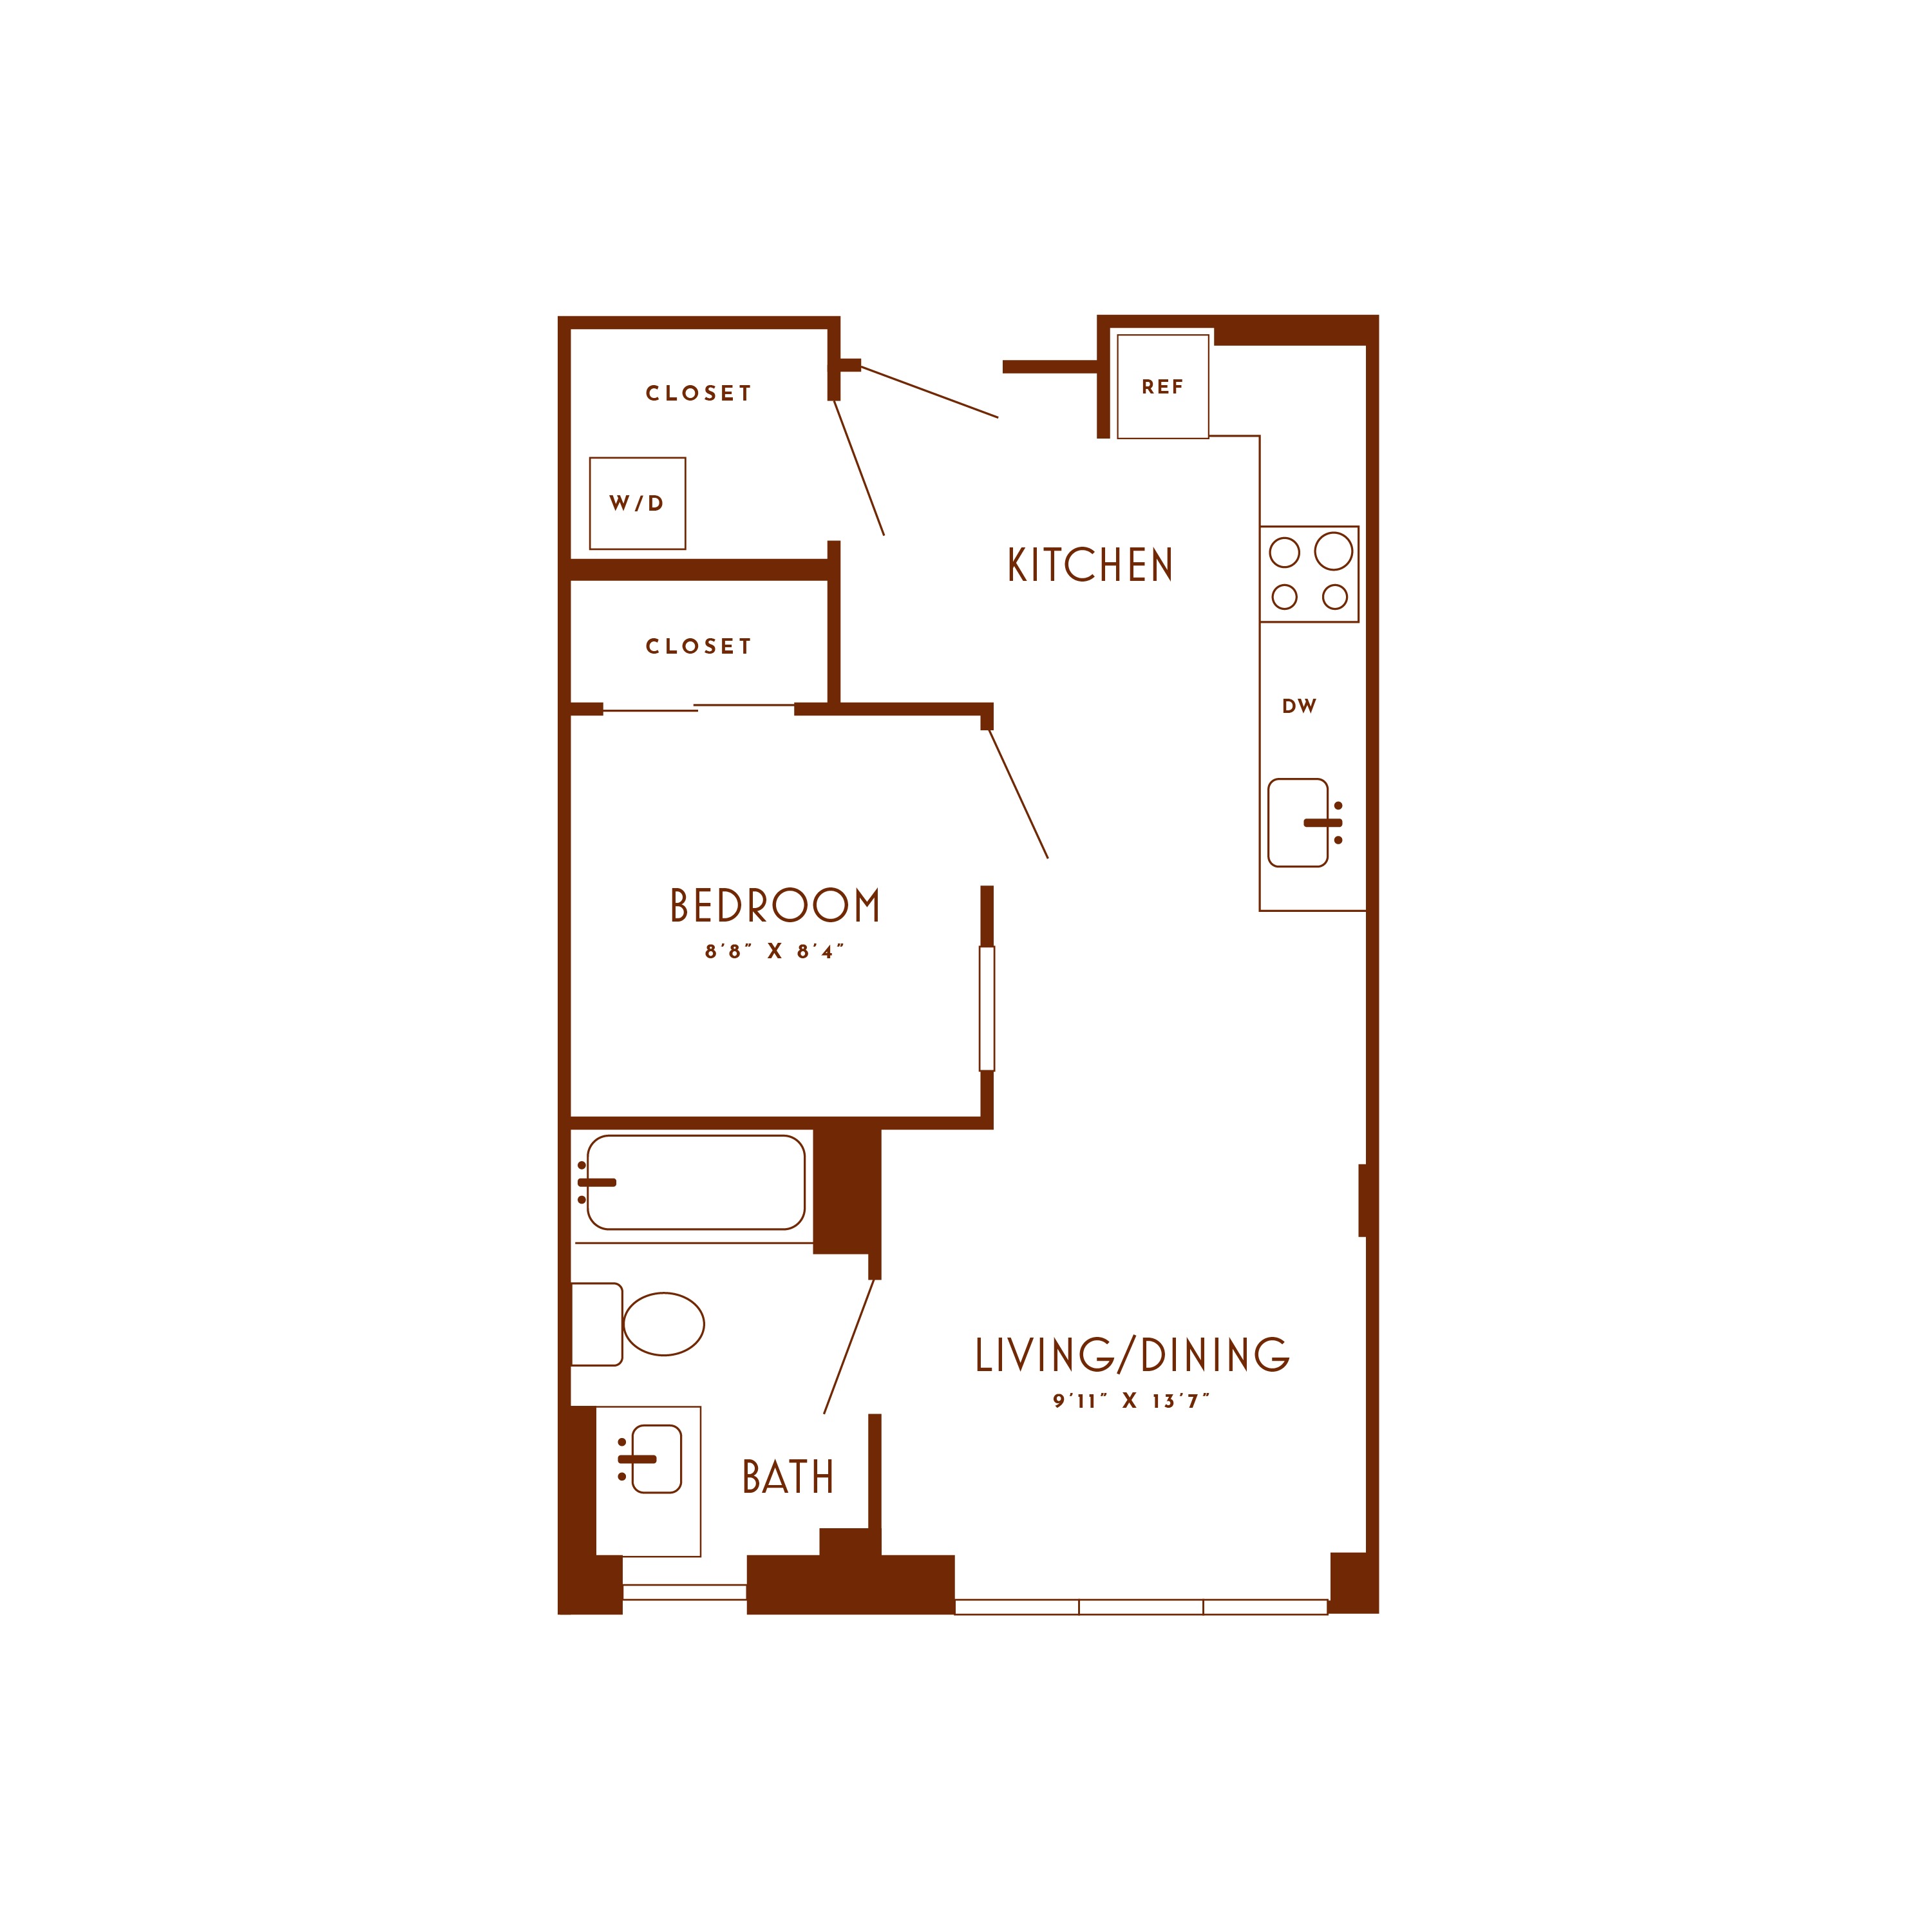 Floor plan image of unit 216